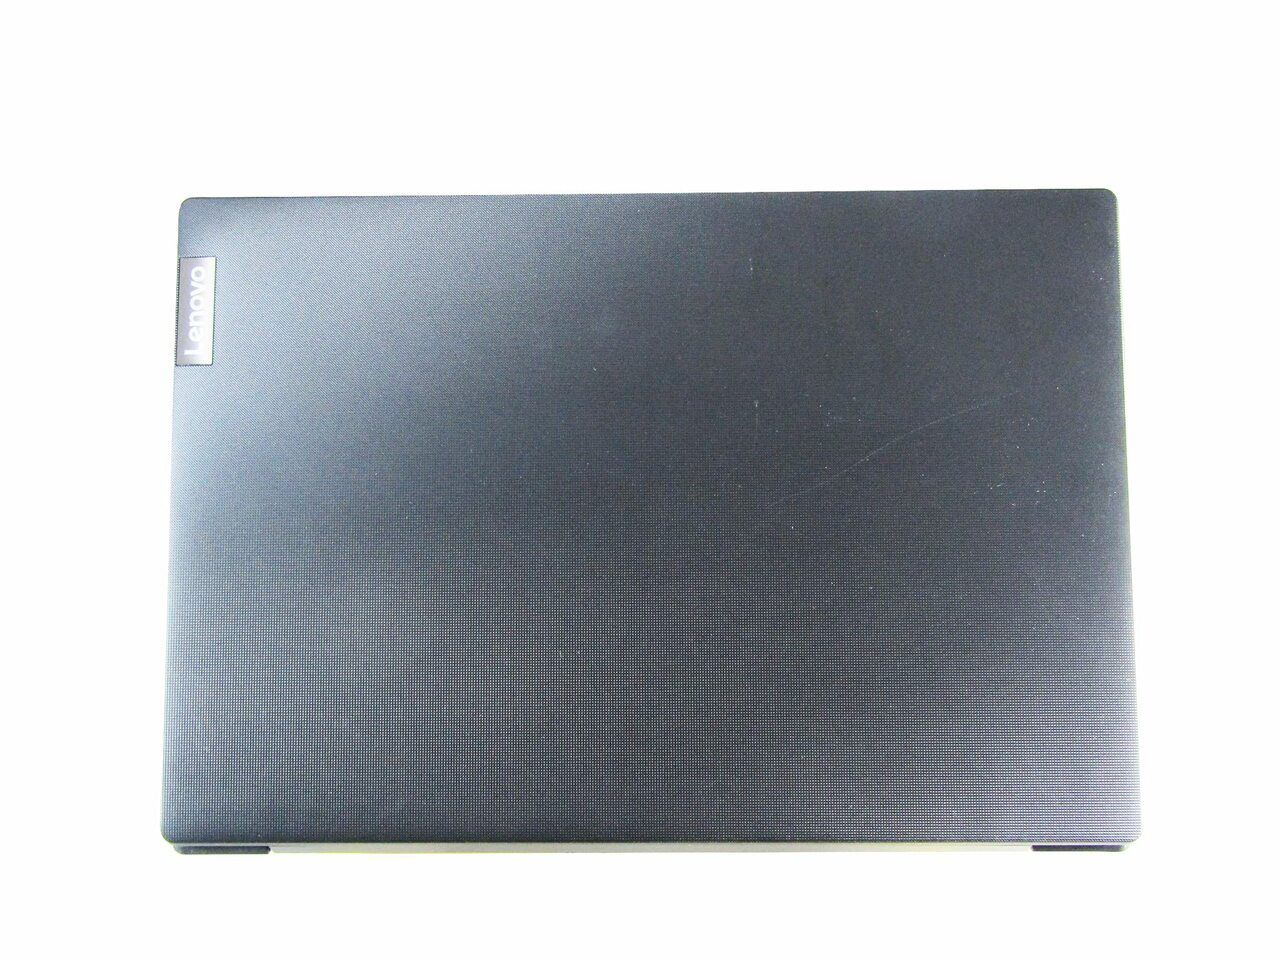 Lenovo S145-15AST 15.6" Laptop AMD A6-9225 4GB Memory 1TB Hard Drive Black LN